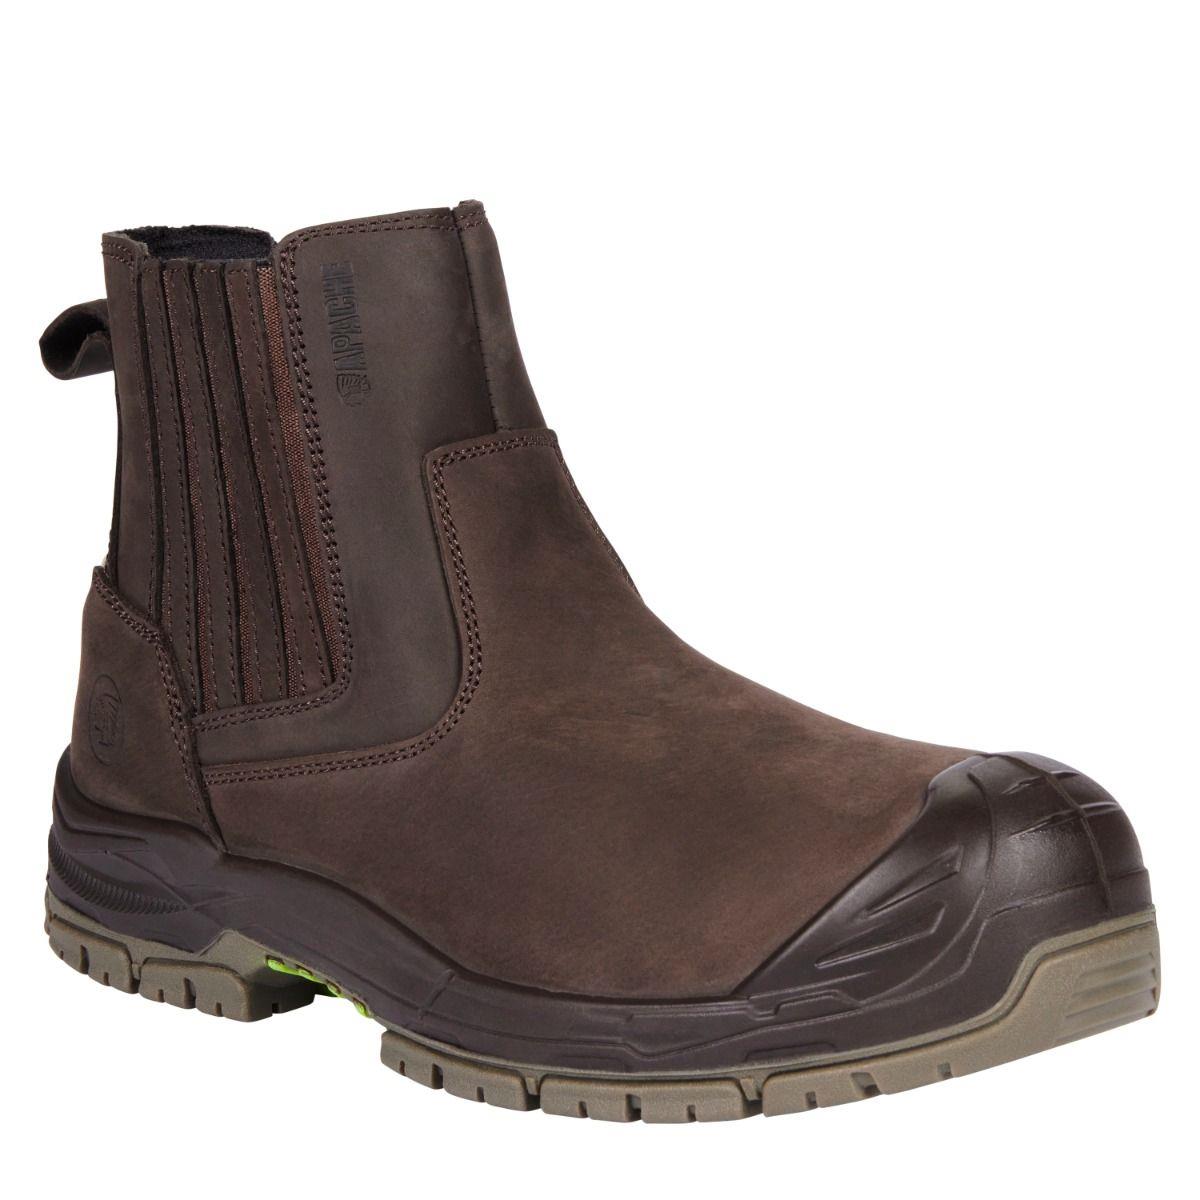 Apache Wabana S3 brown composite toe/midsole scuff cap work safety dealer boots